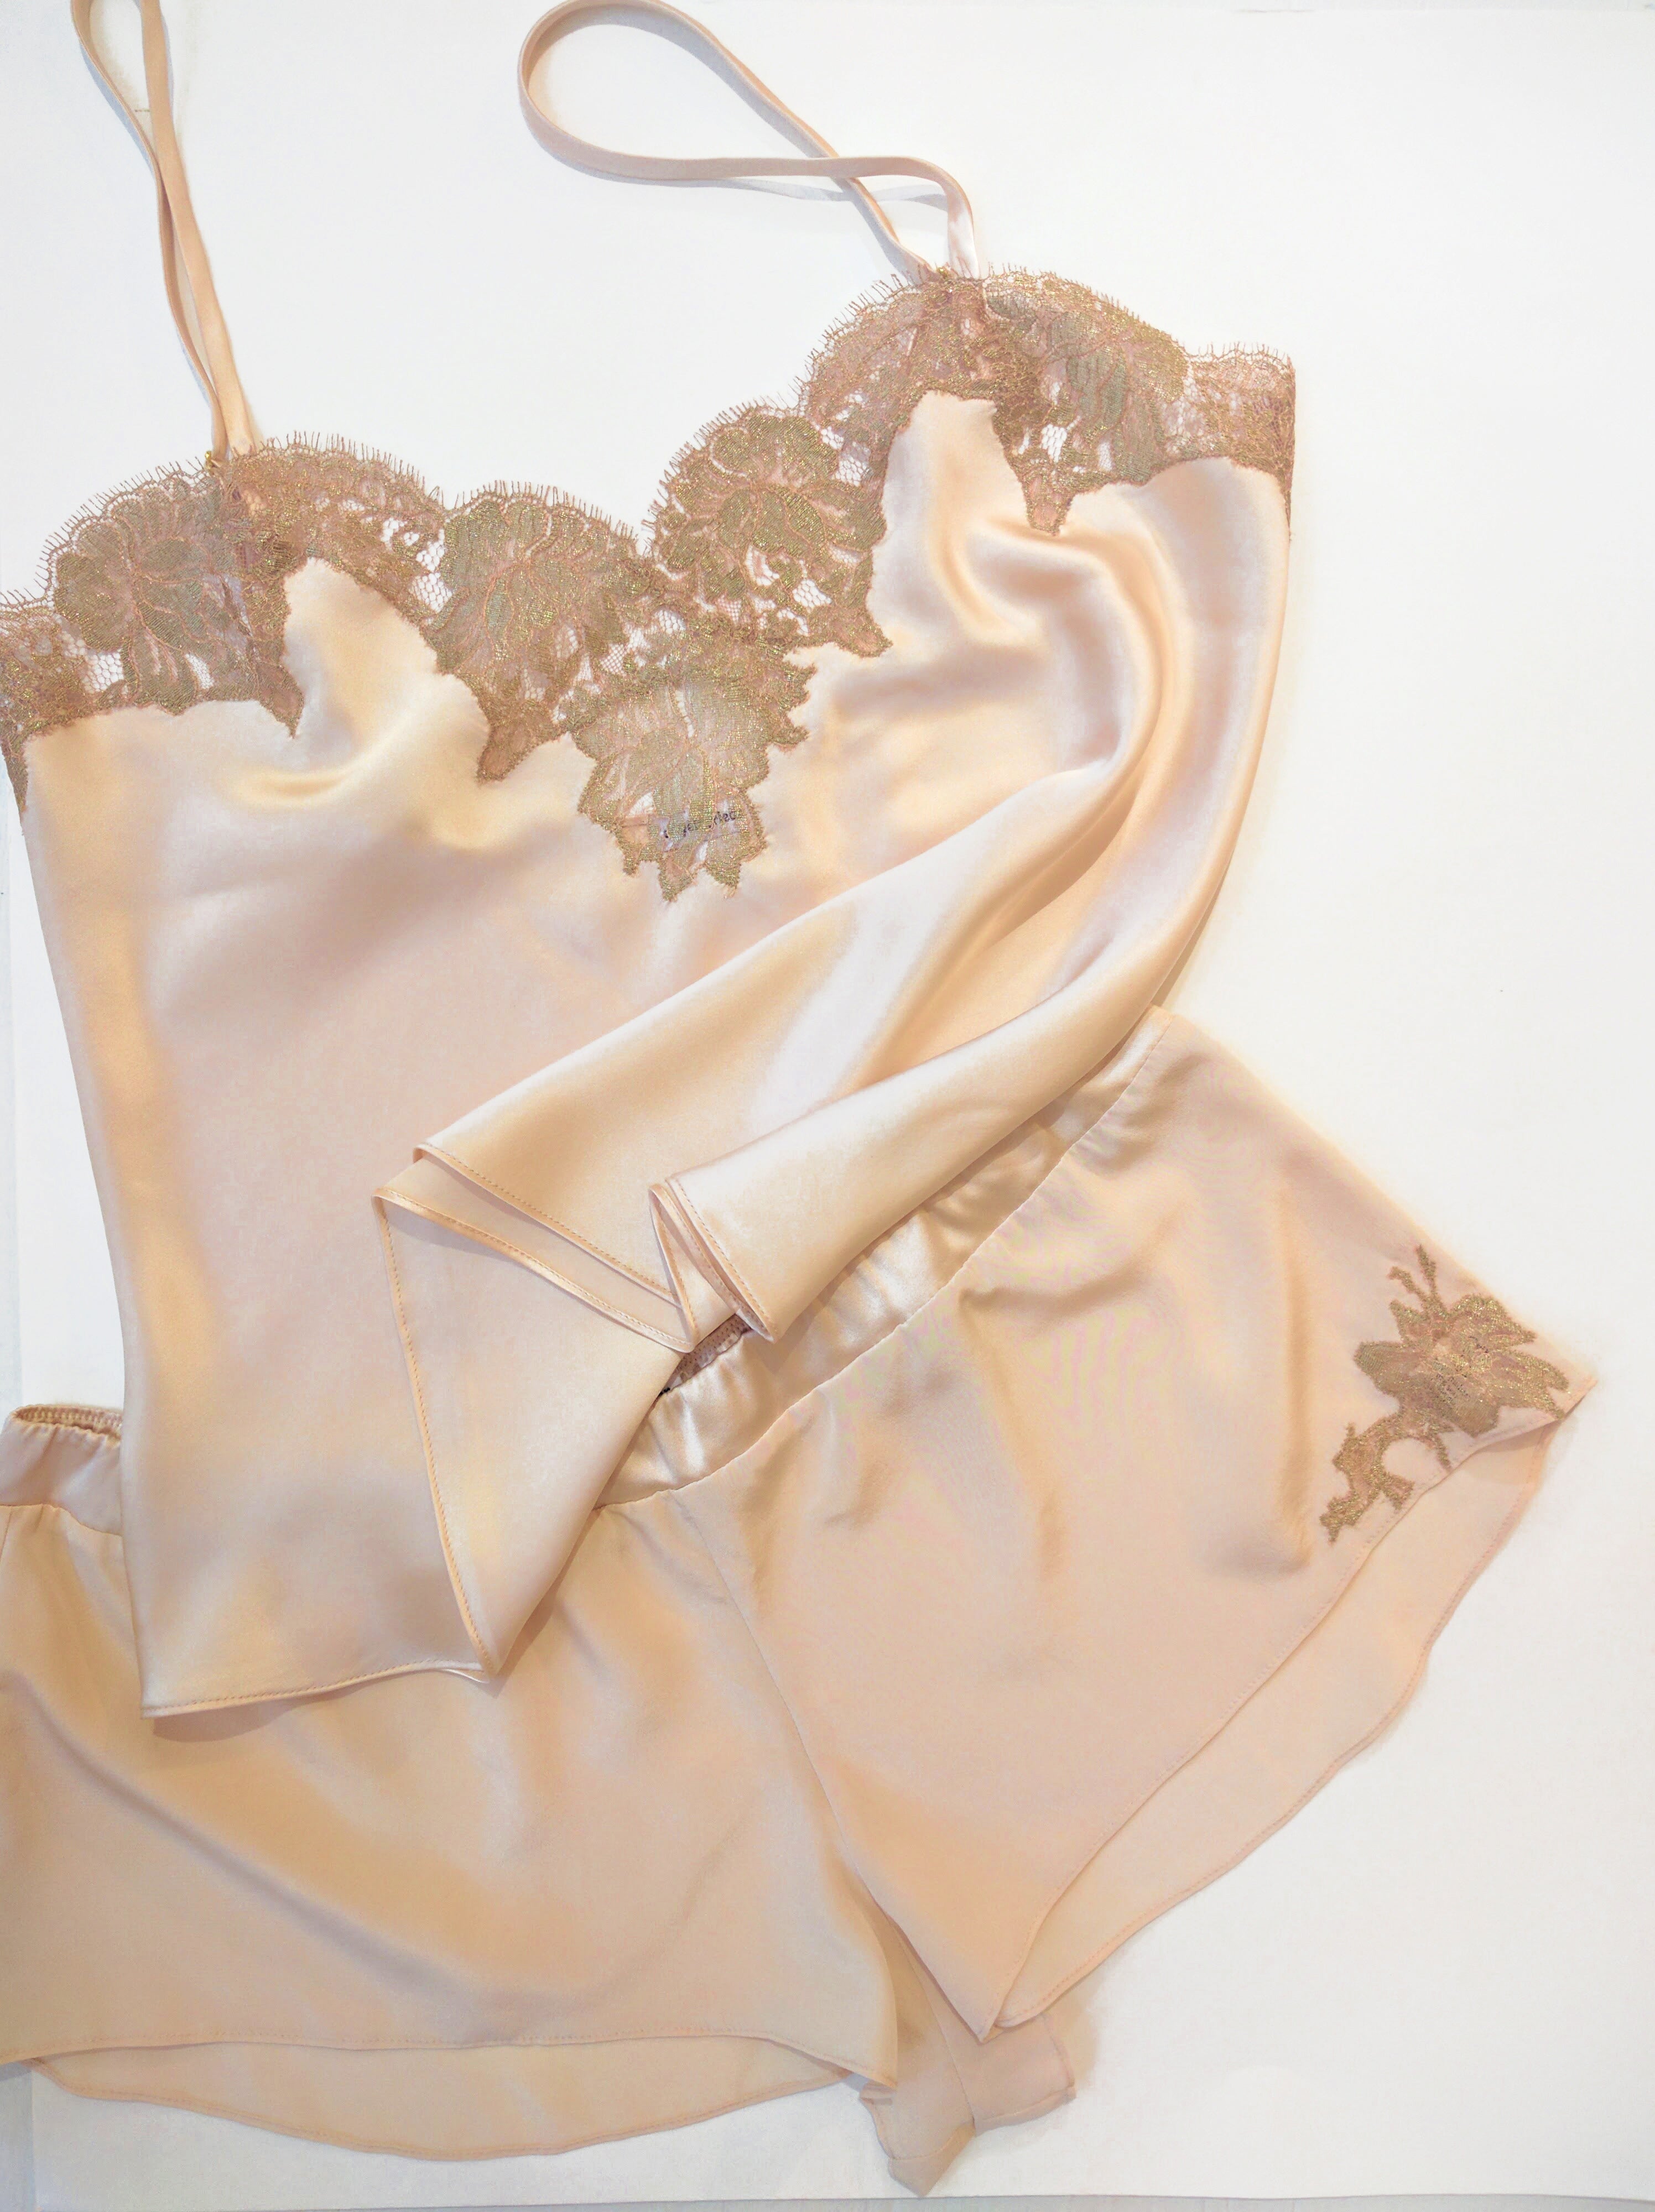 Vintage style lingerie set in peach silk with scallop lace applique trims